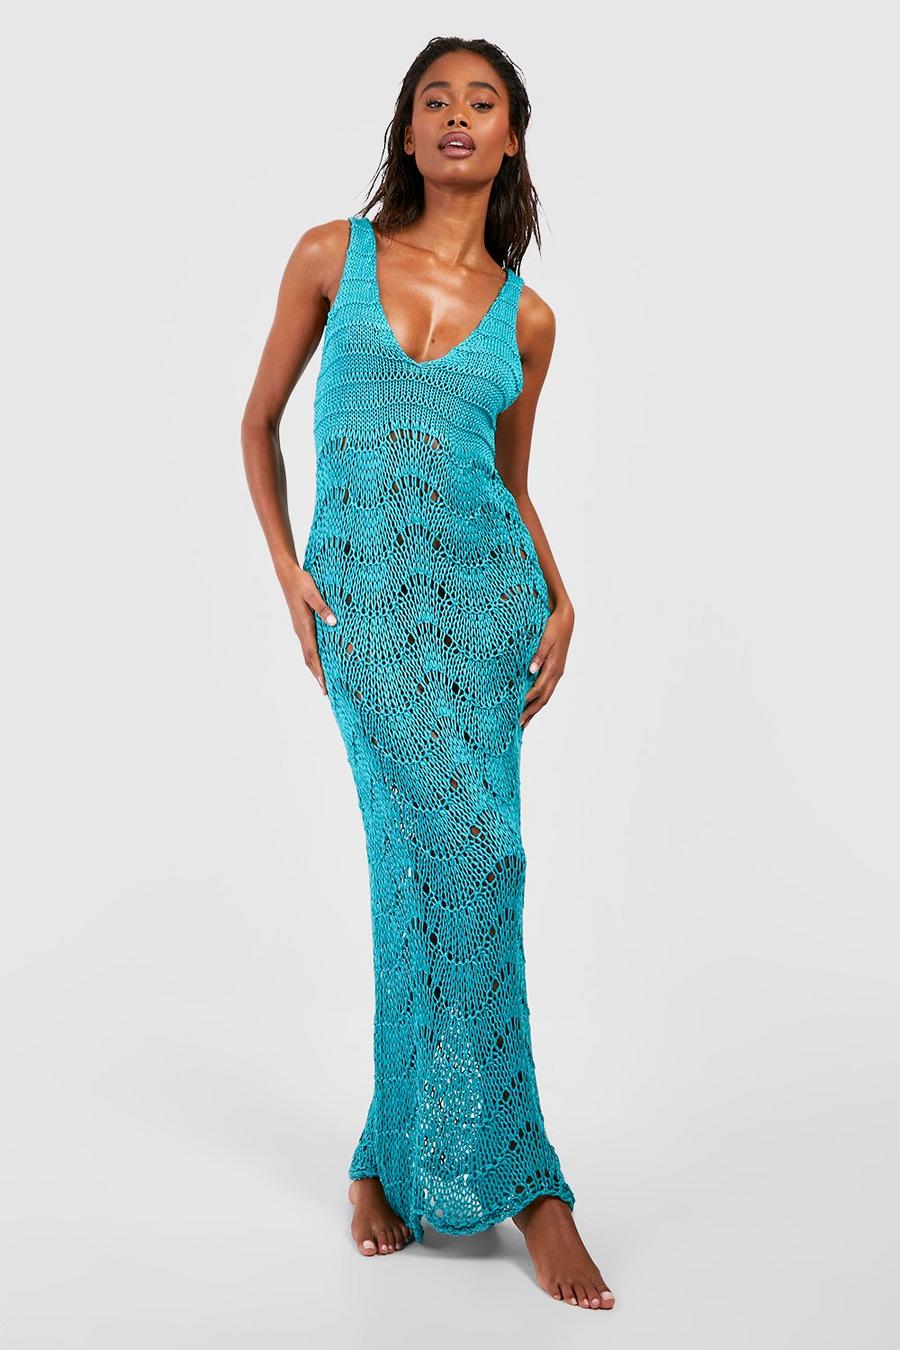 Aqua bleu Crochet Scallop Scoop Beach Dress